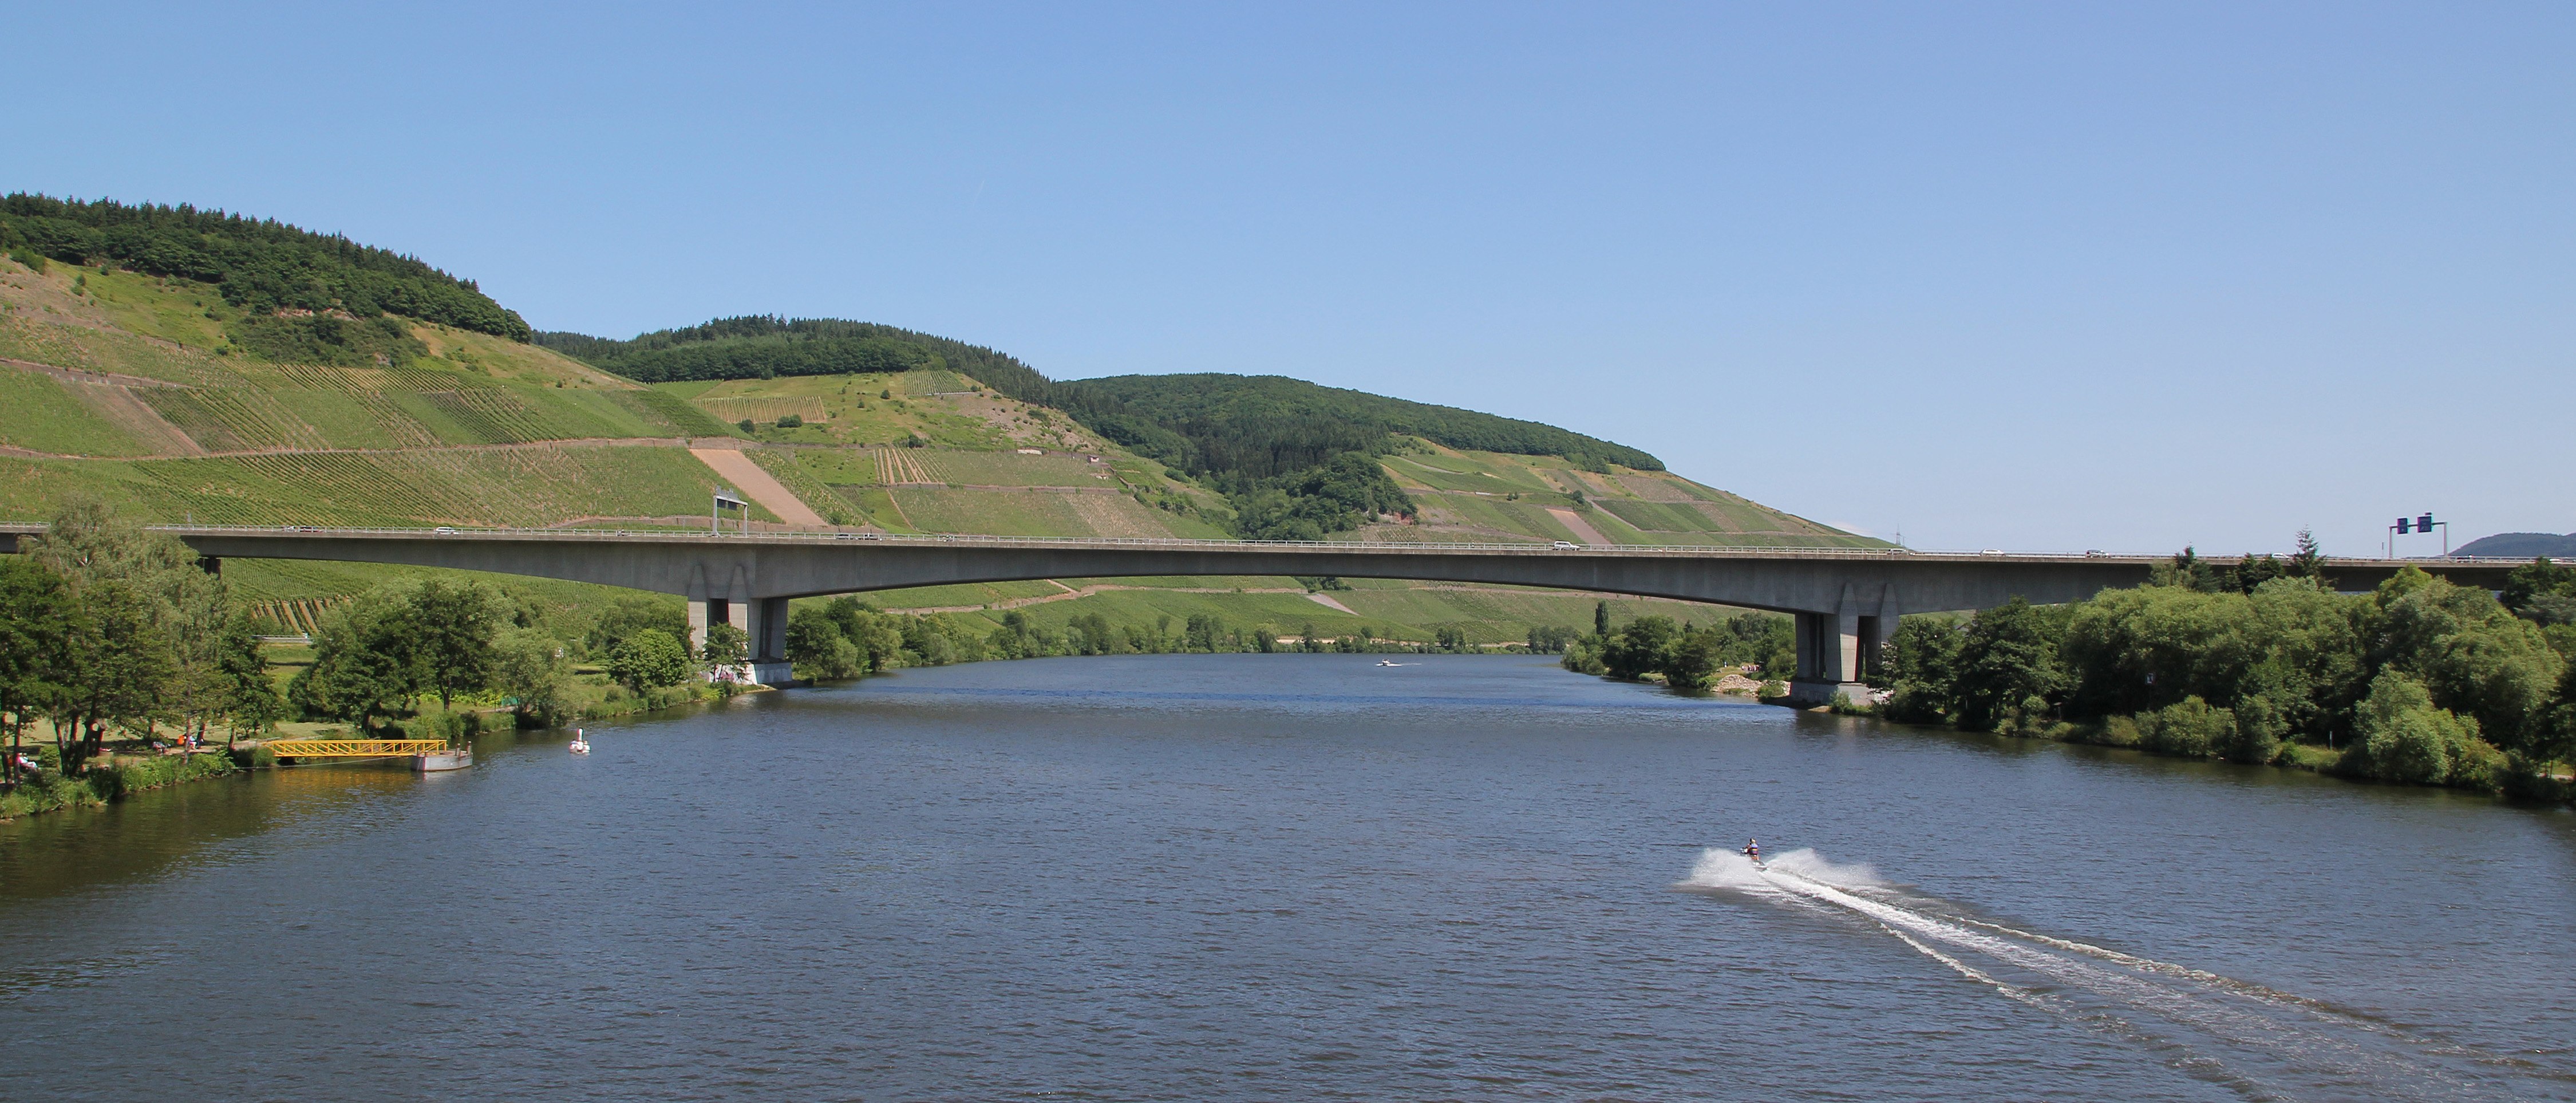 Река мозель приток. Мост и дамба на реке Мозель Люксембург. Мост Мозель.